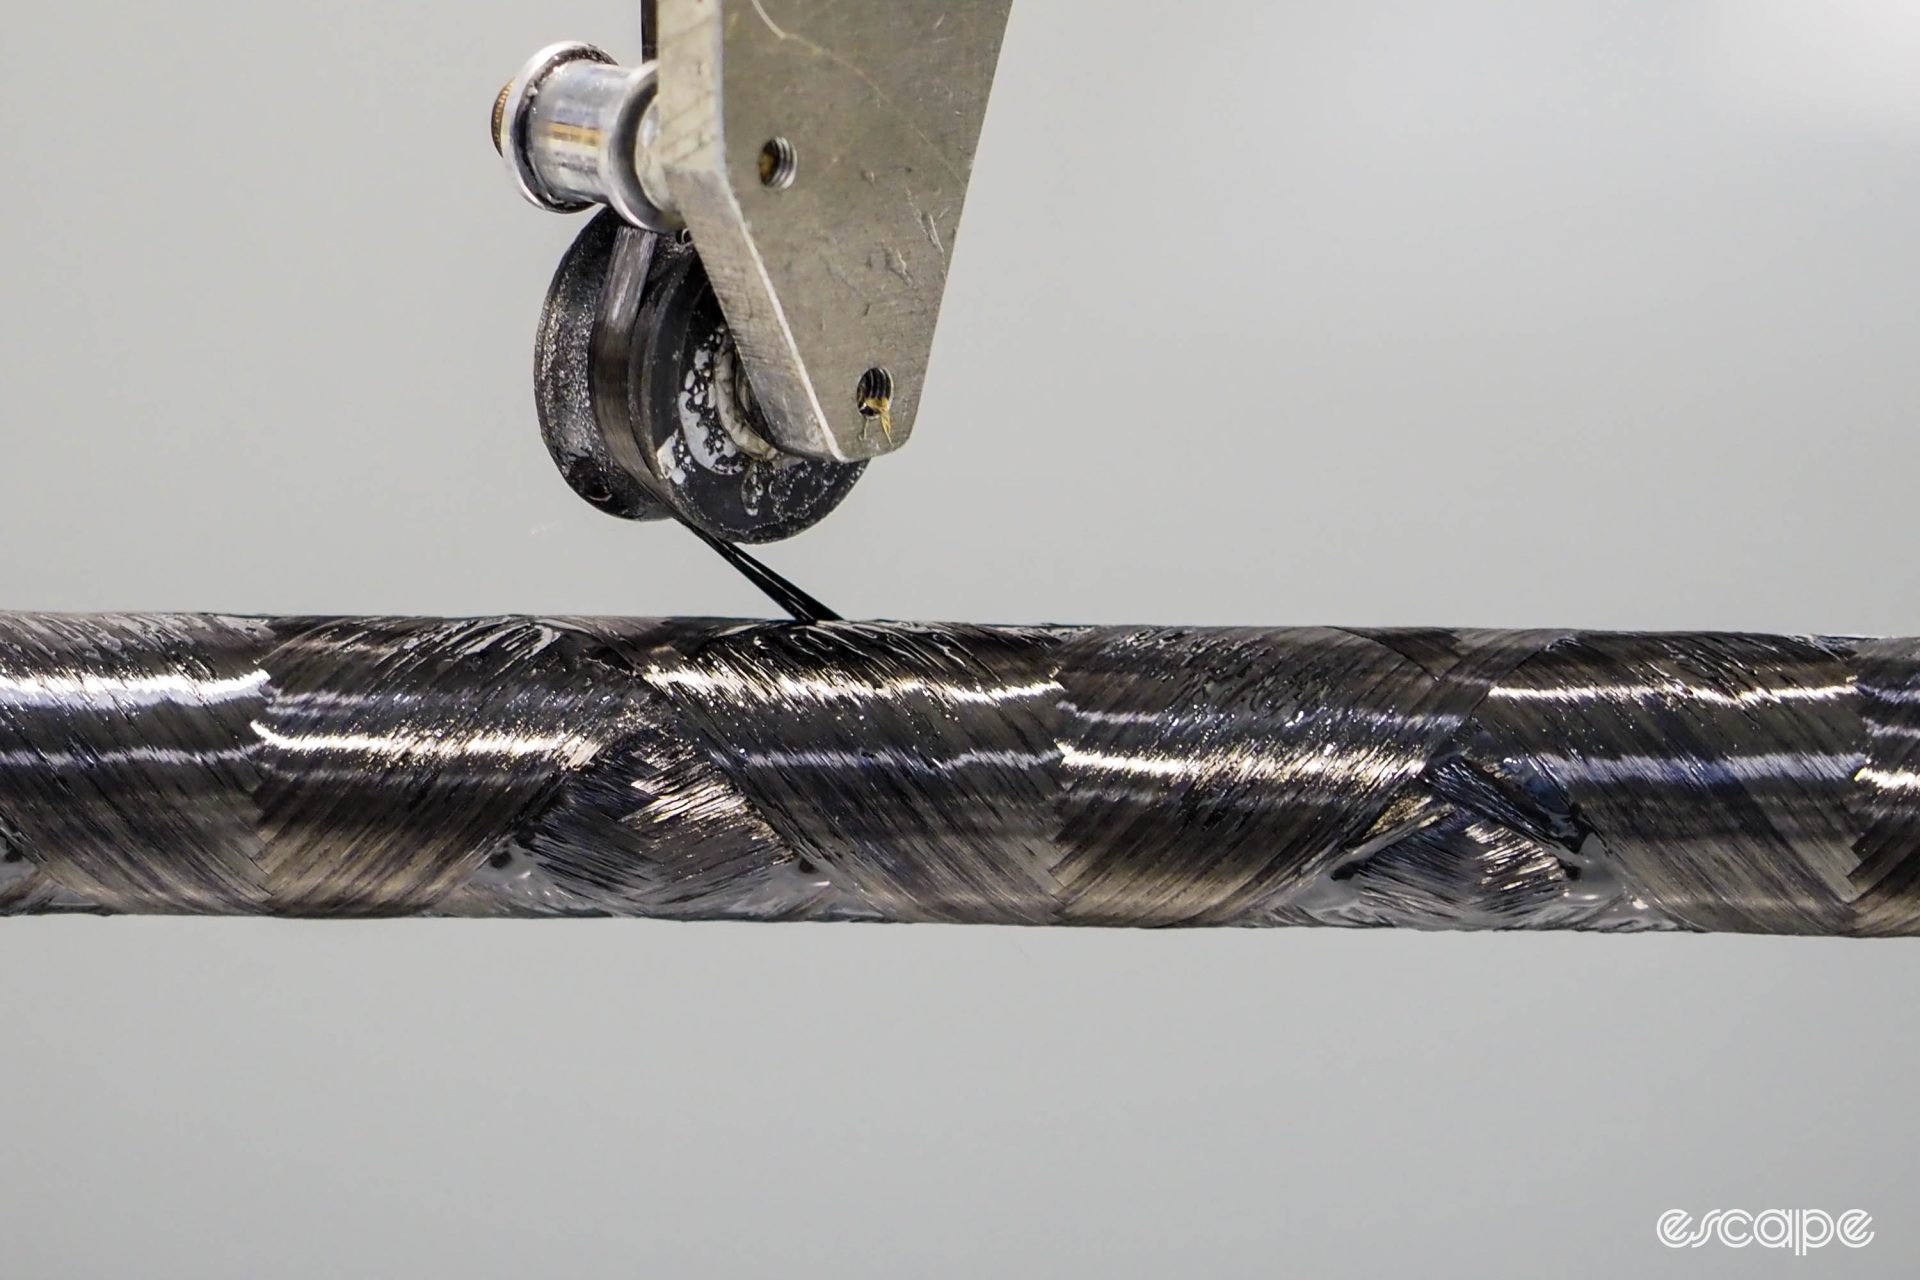 Framework filament wound carbon fiber pattern